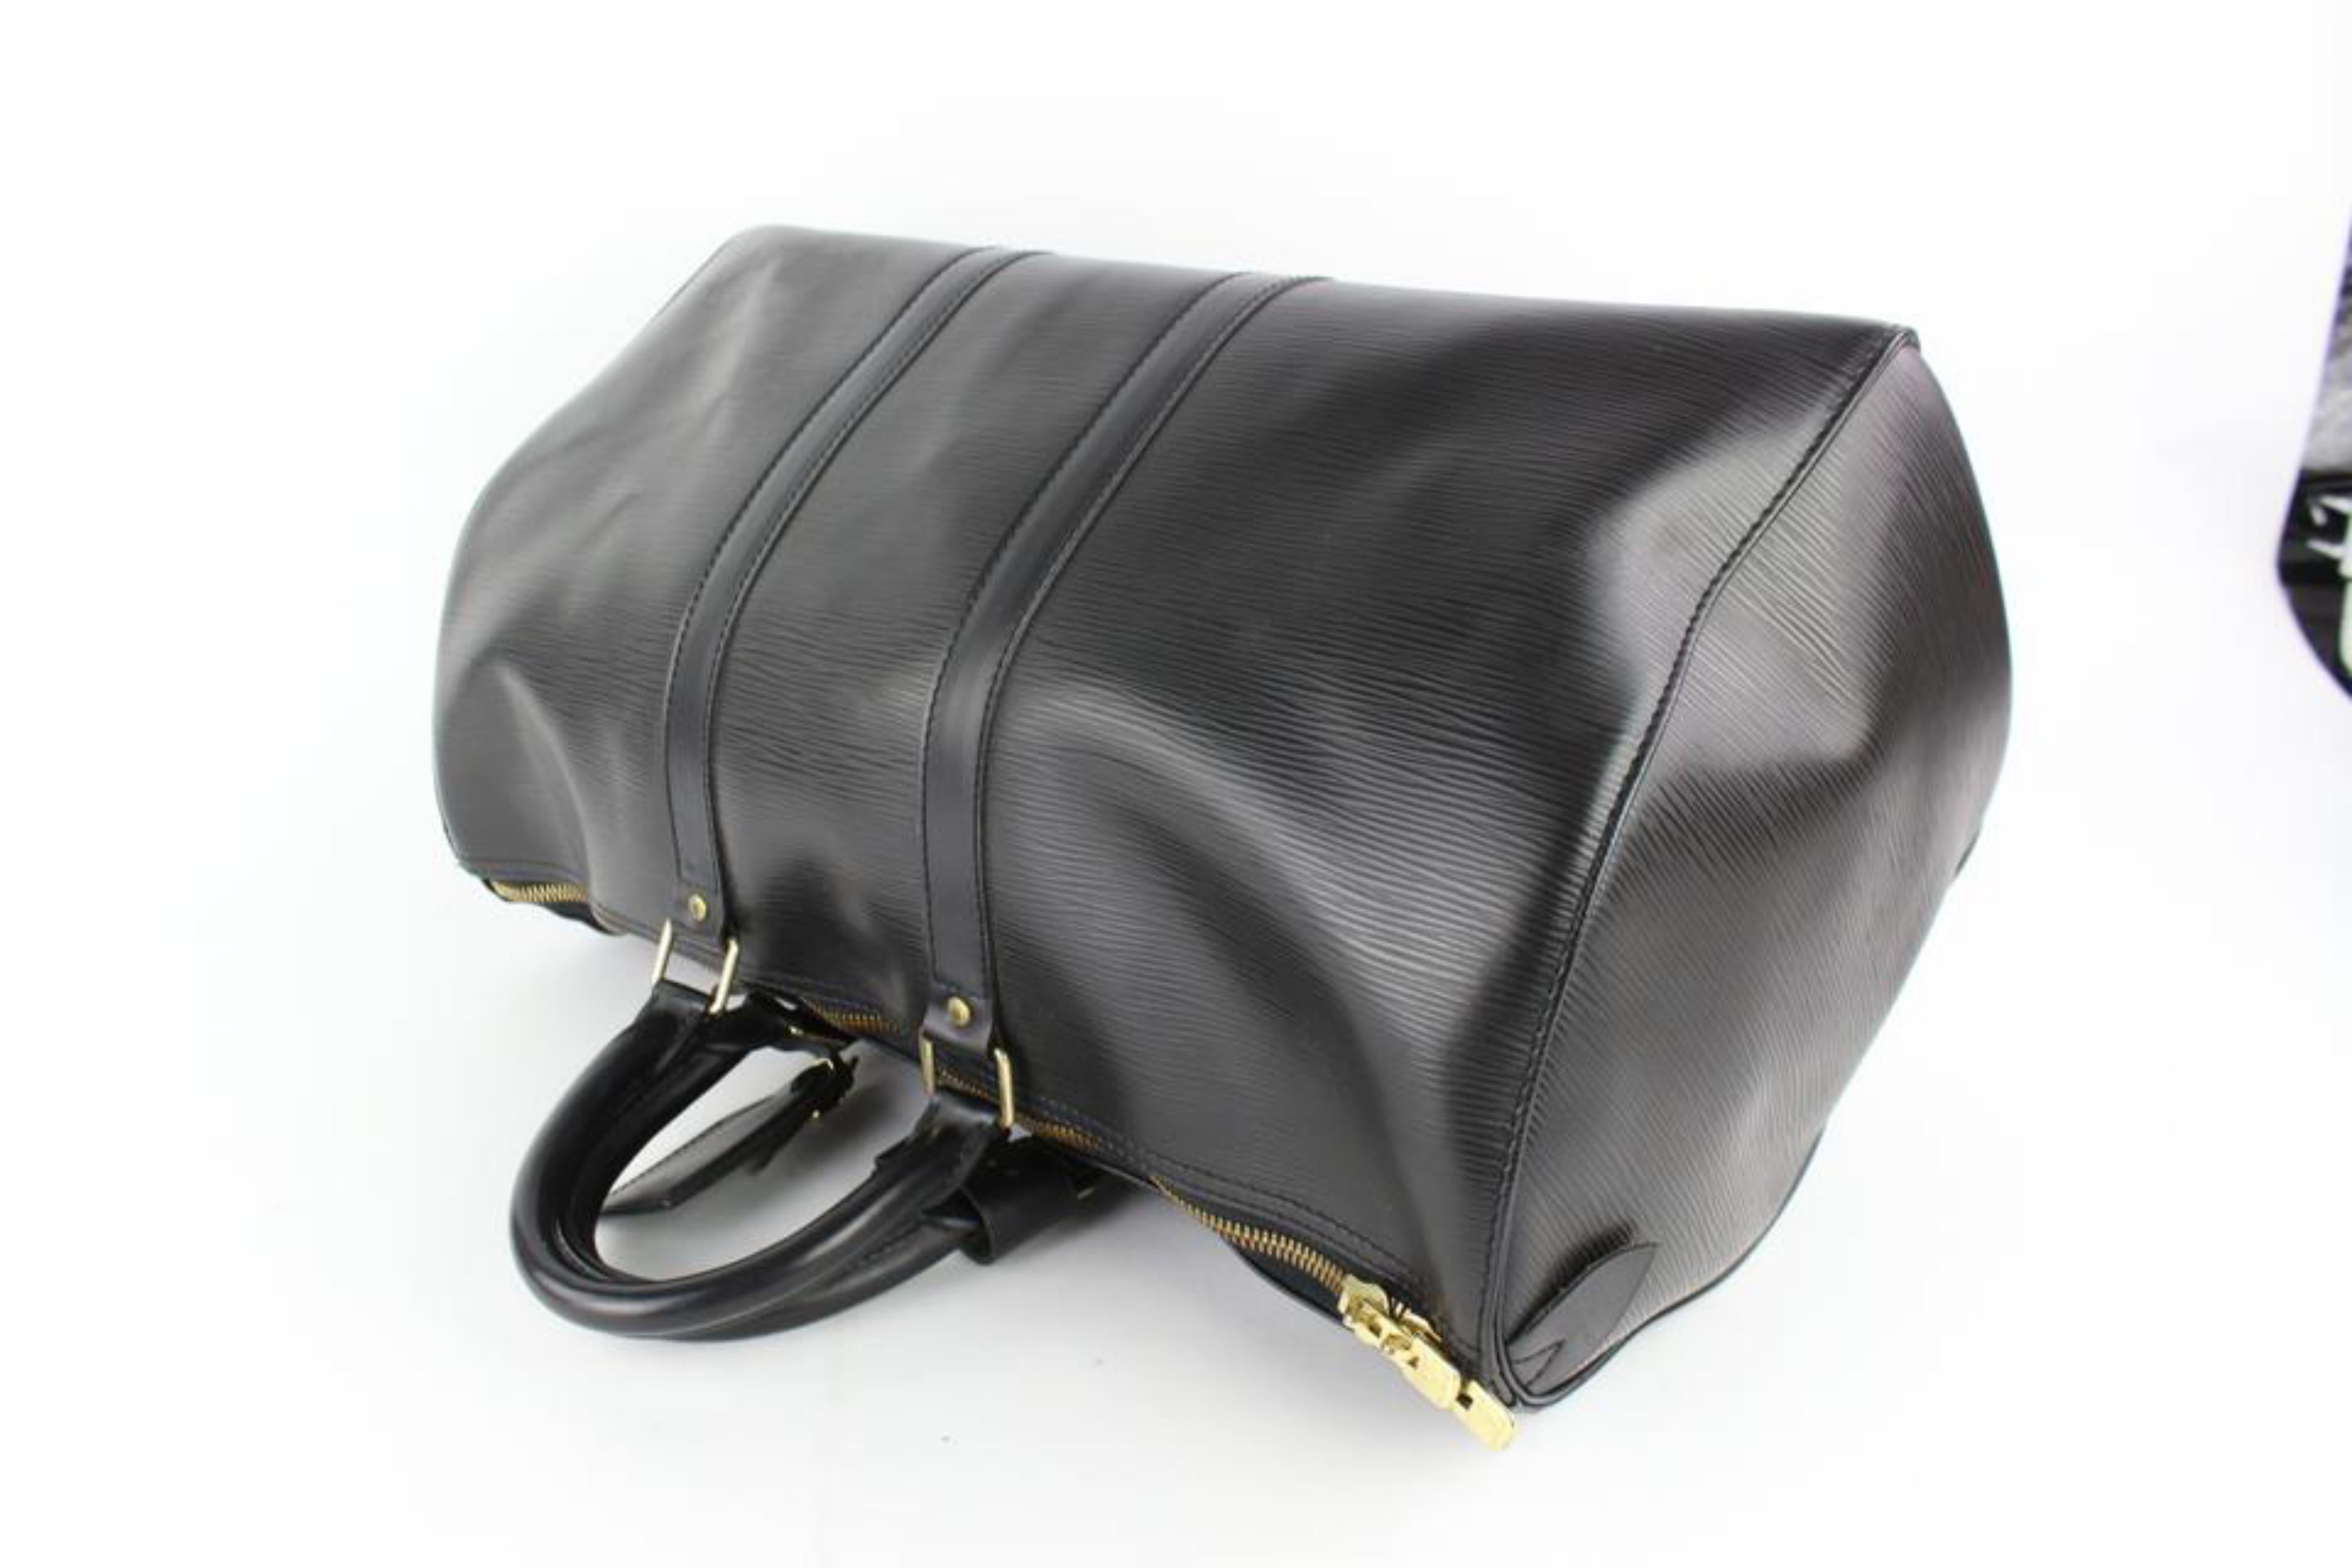 Louis Vuitton Keepall Duffle Noir 45 5lz0129 Black Leather Weekend/Travel Bag For Sale 2